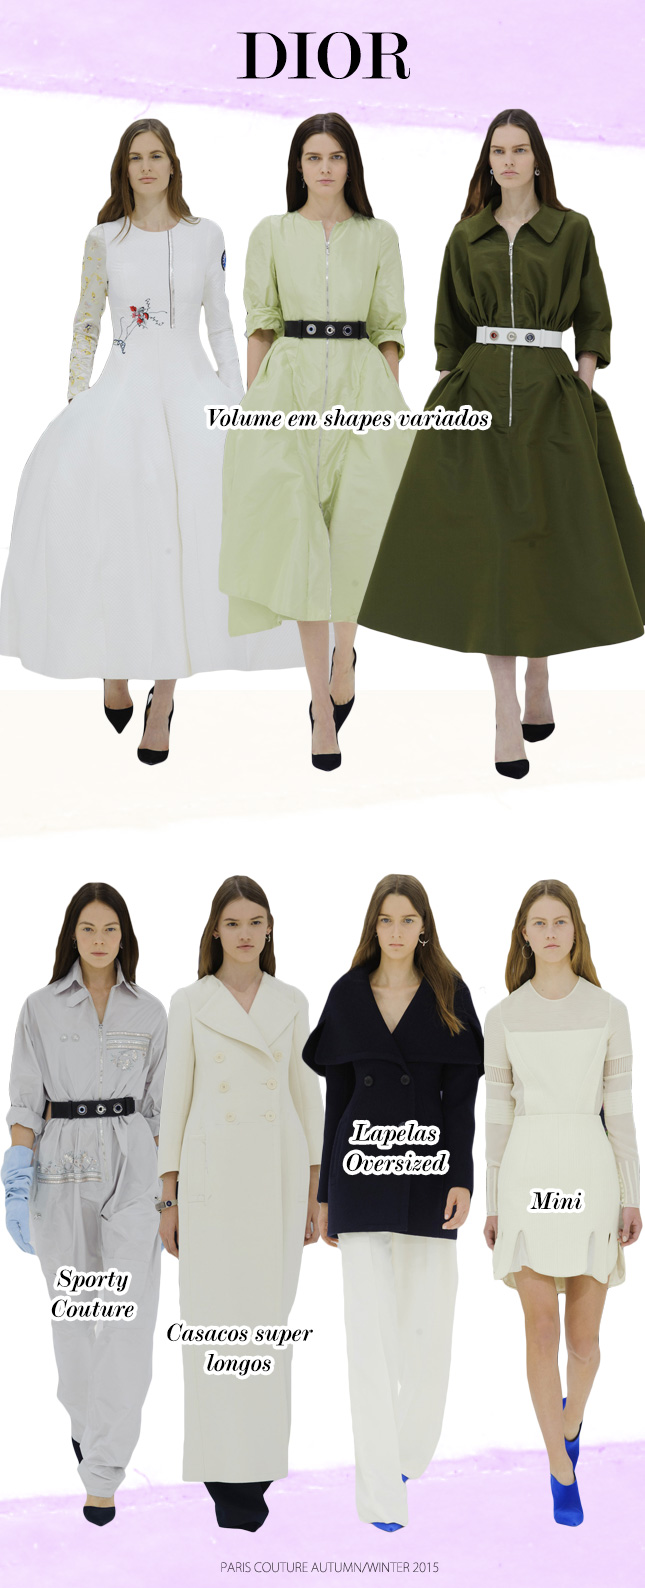 haute couture paris fashion week blog de moda oh my closet desfile dior tendencia inverno 2015 autumn winter couture